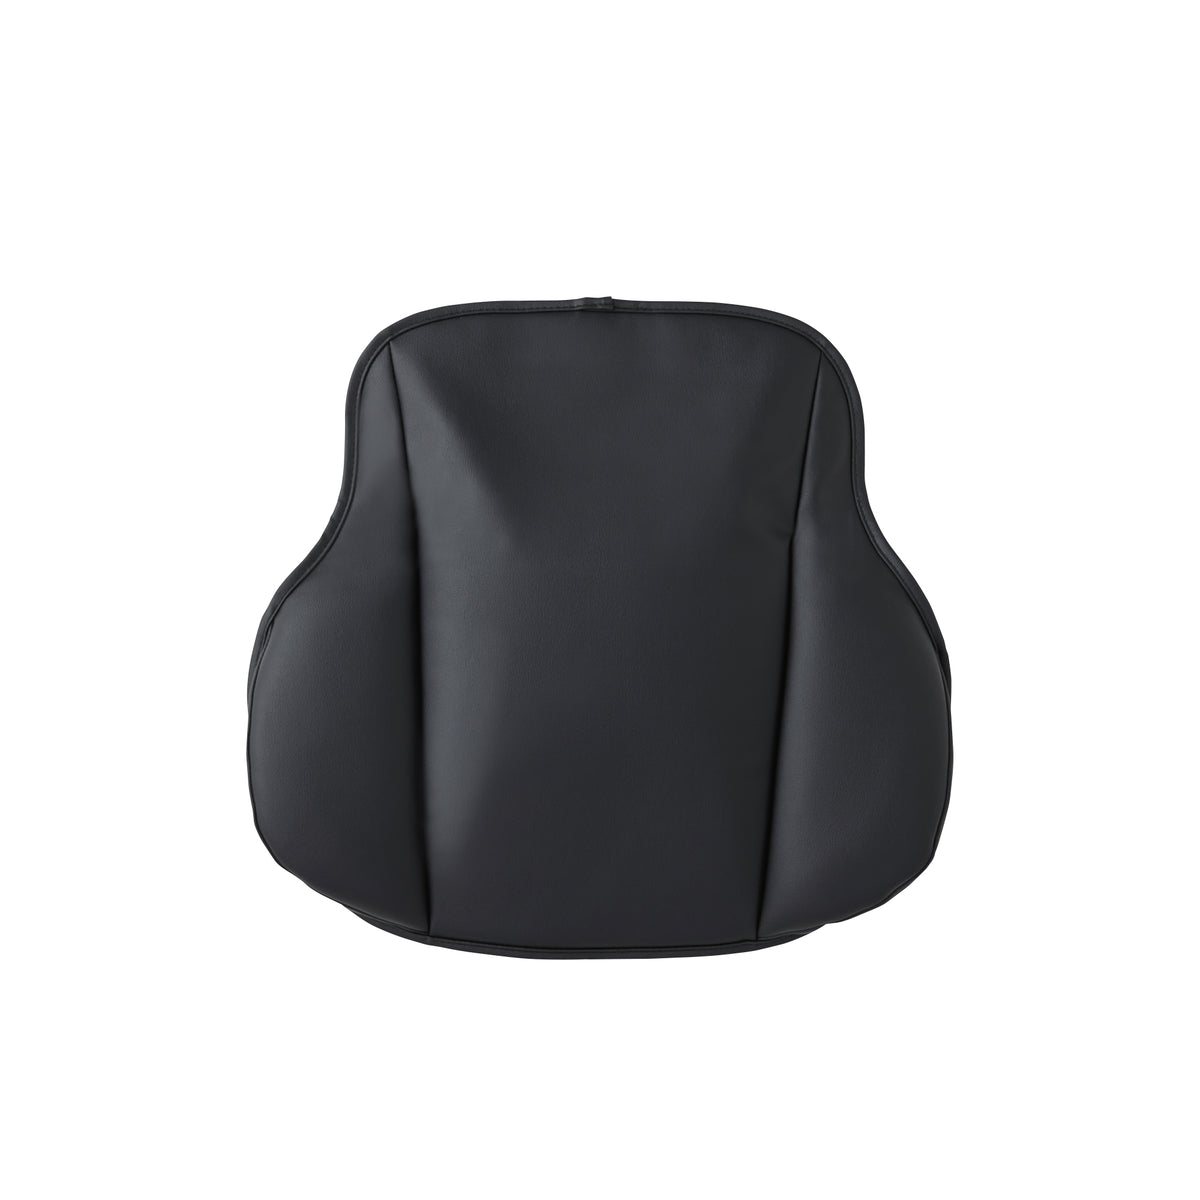 Synca JP1000 4D Ultra Premium Massage Chair